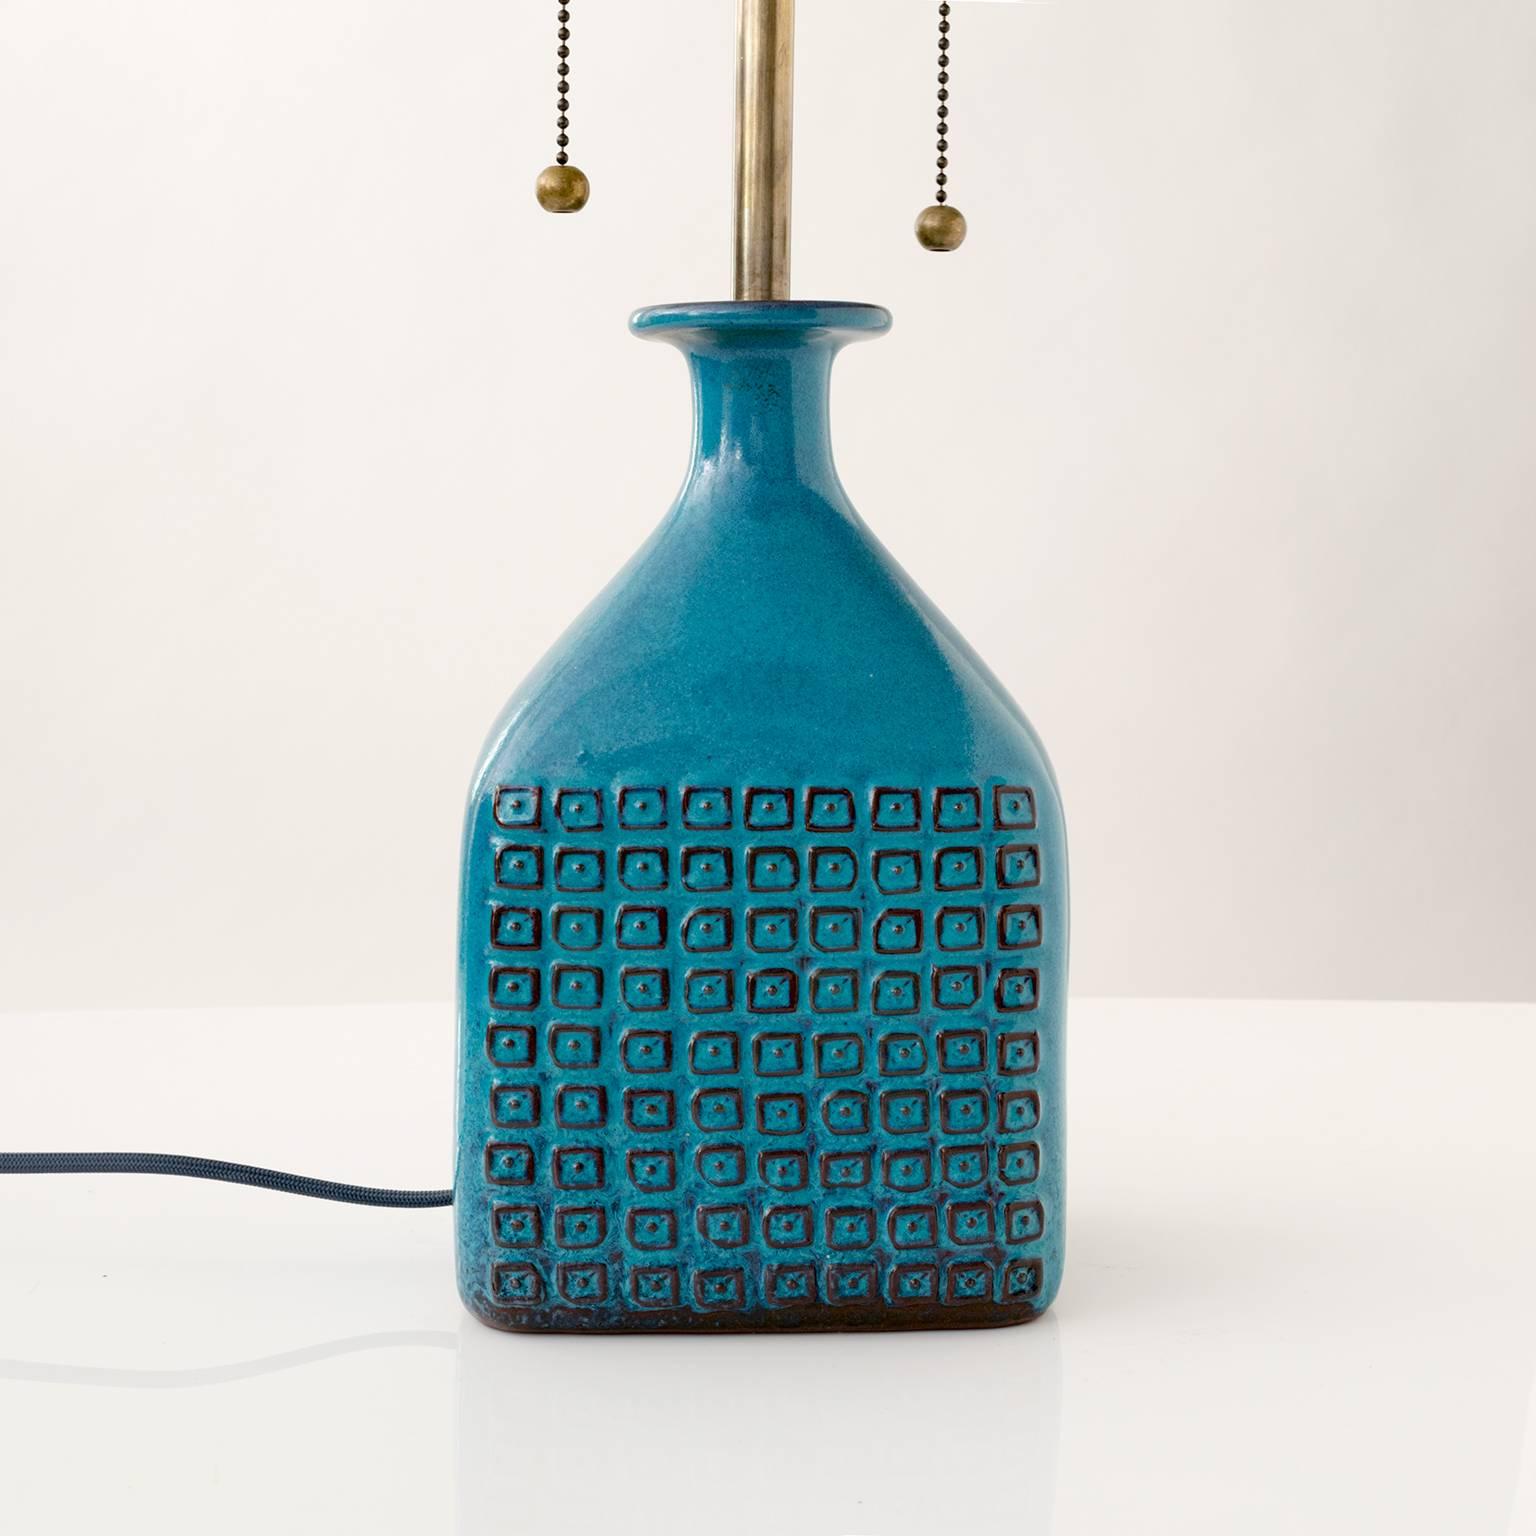 20th Century Scandinavian Modern ceramic lamp, Stig Lindberg, Gustavsberg, Sweden